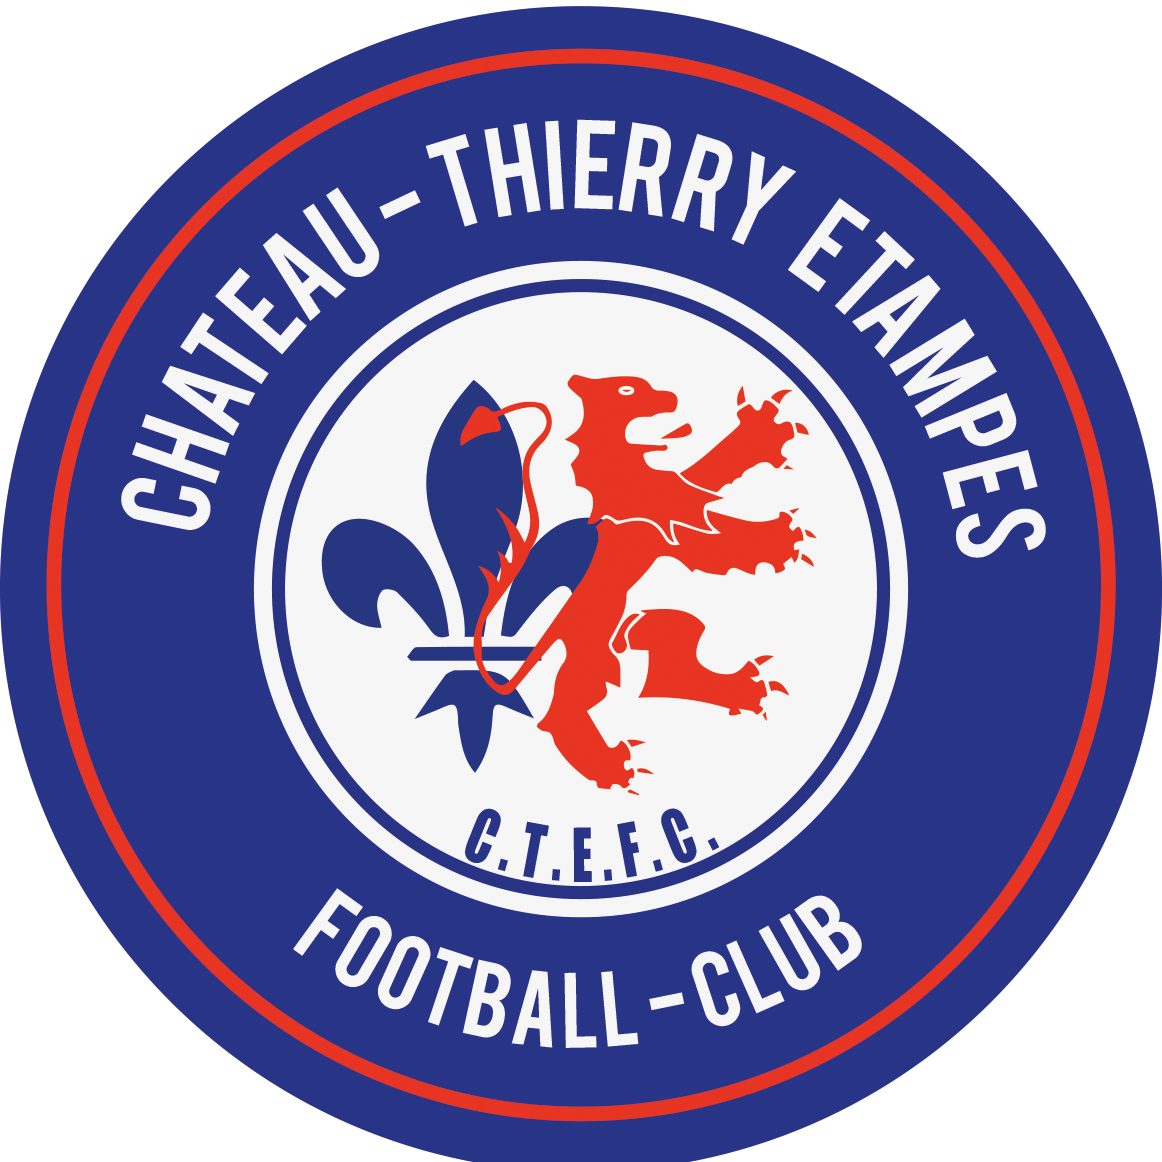 chateau-thierry_etampes_fc_logo